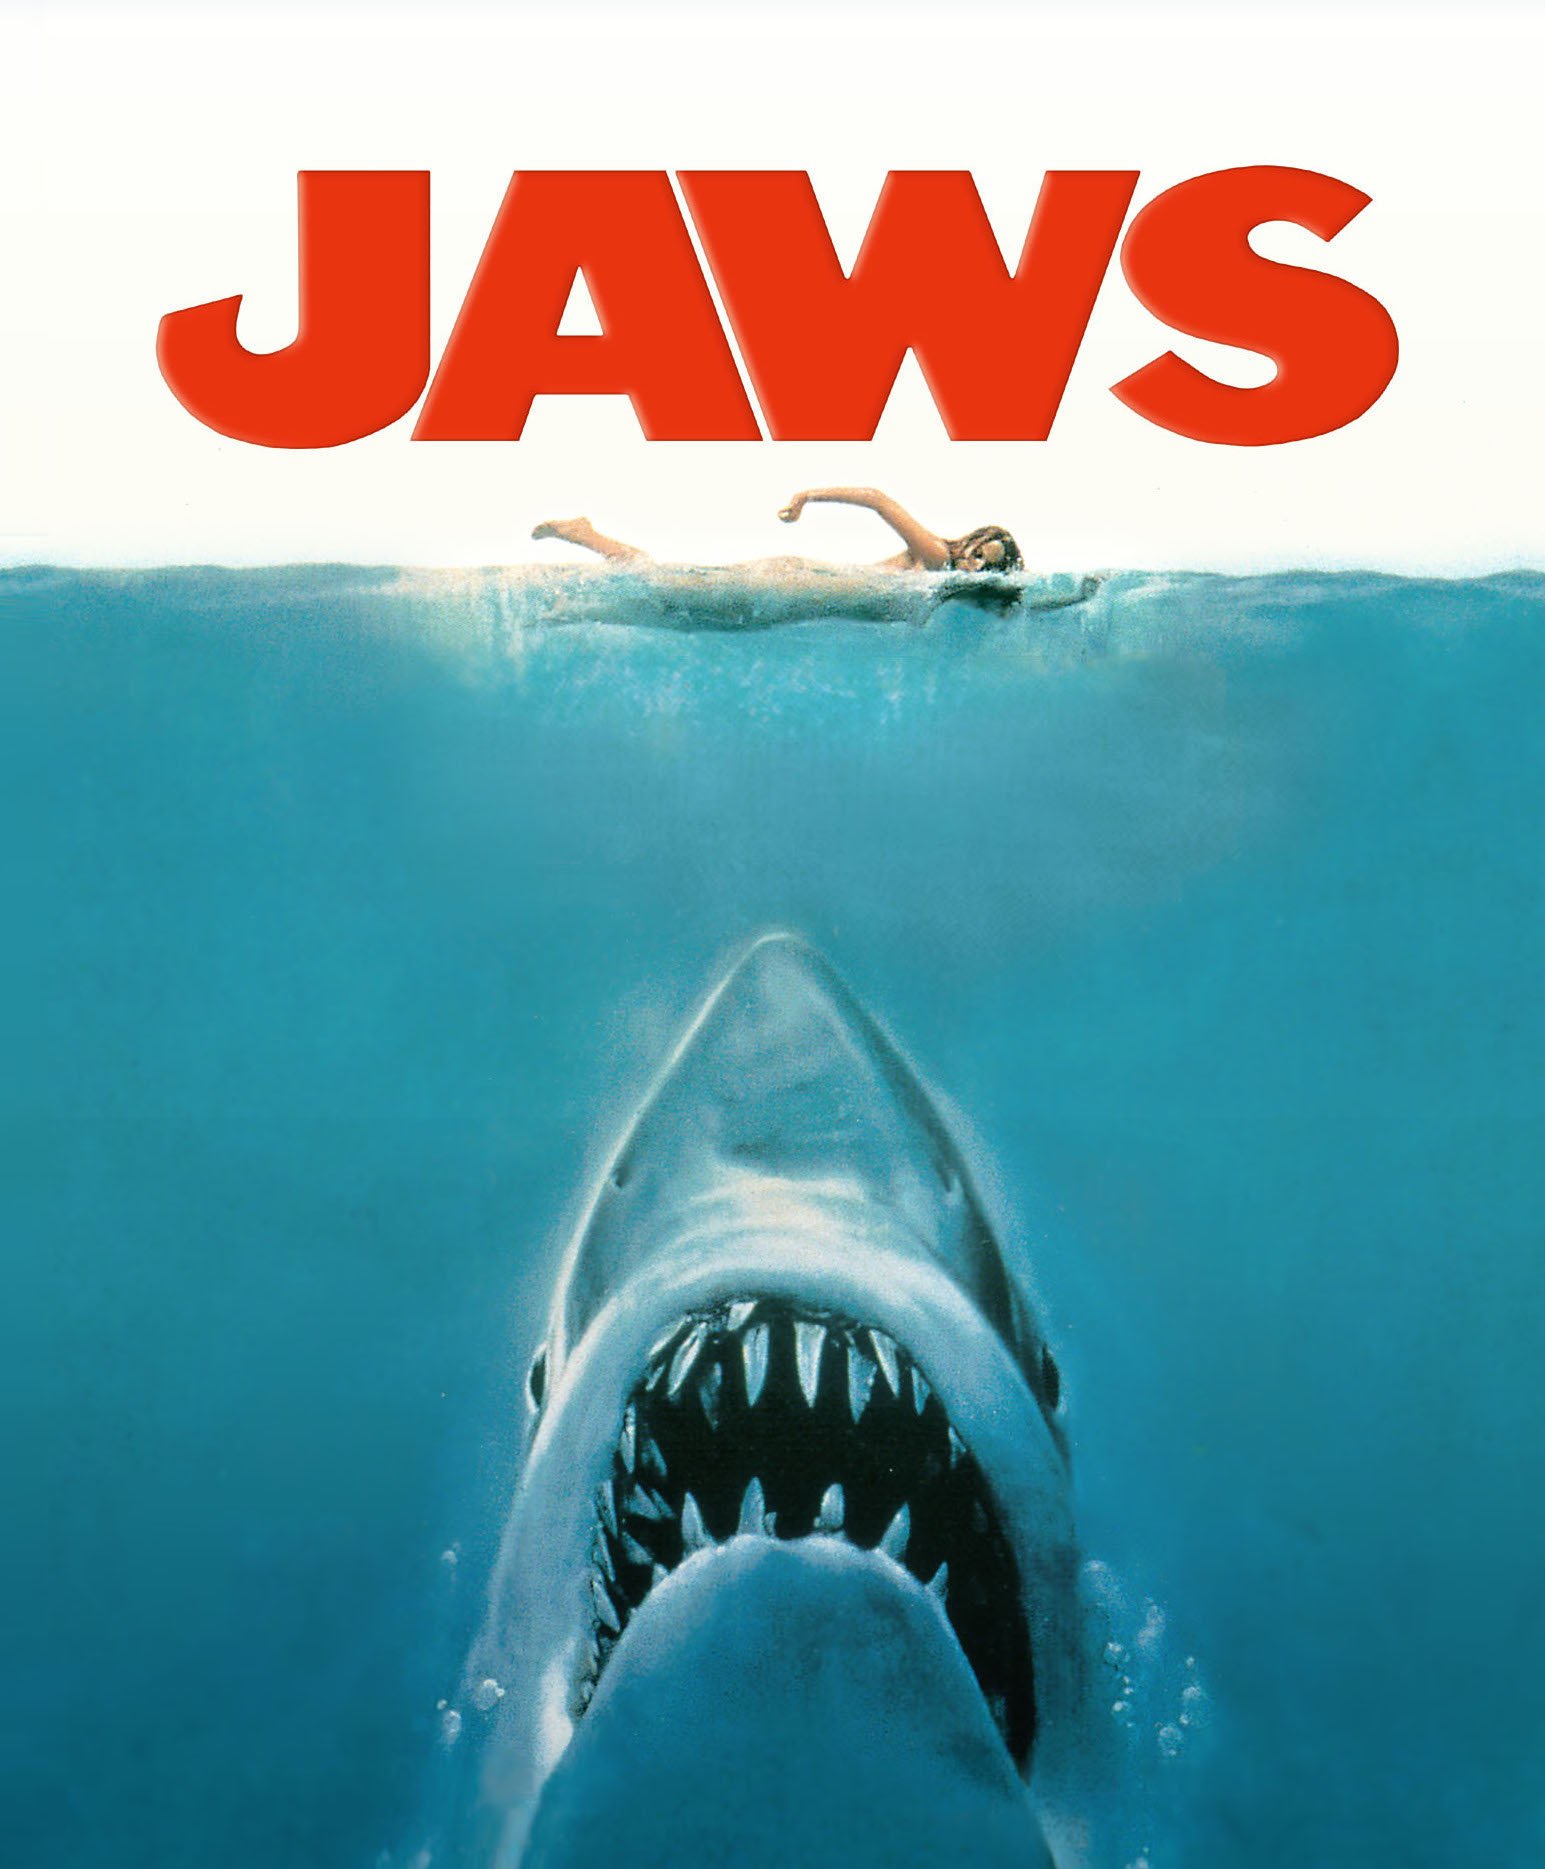 Jaws wallpaper, Movie, HQ Jaws pictureK Wallpaper 2019